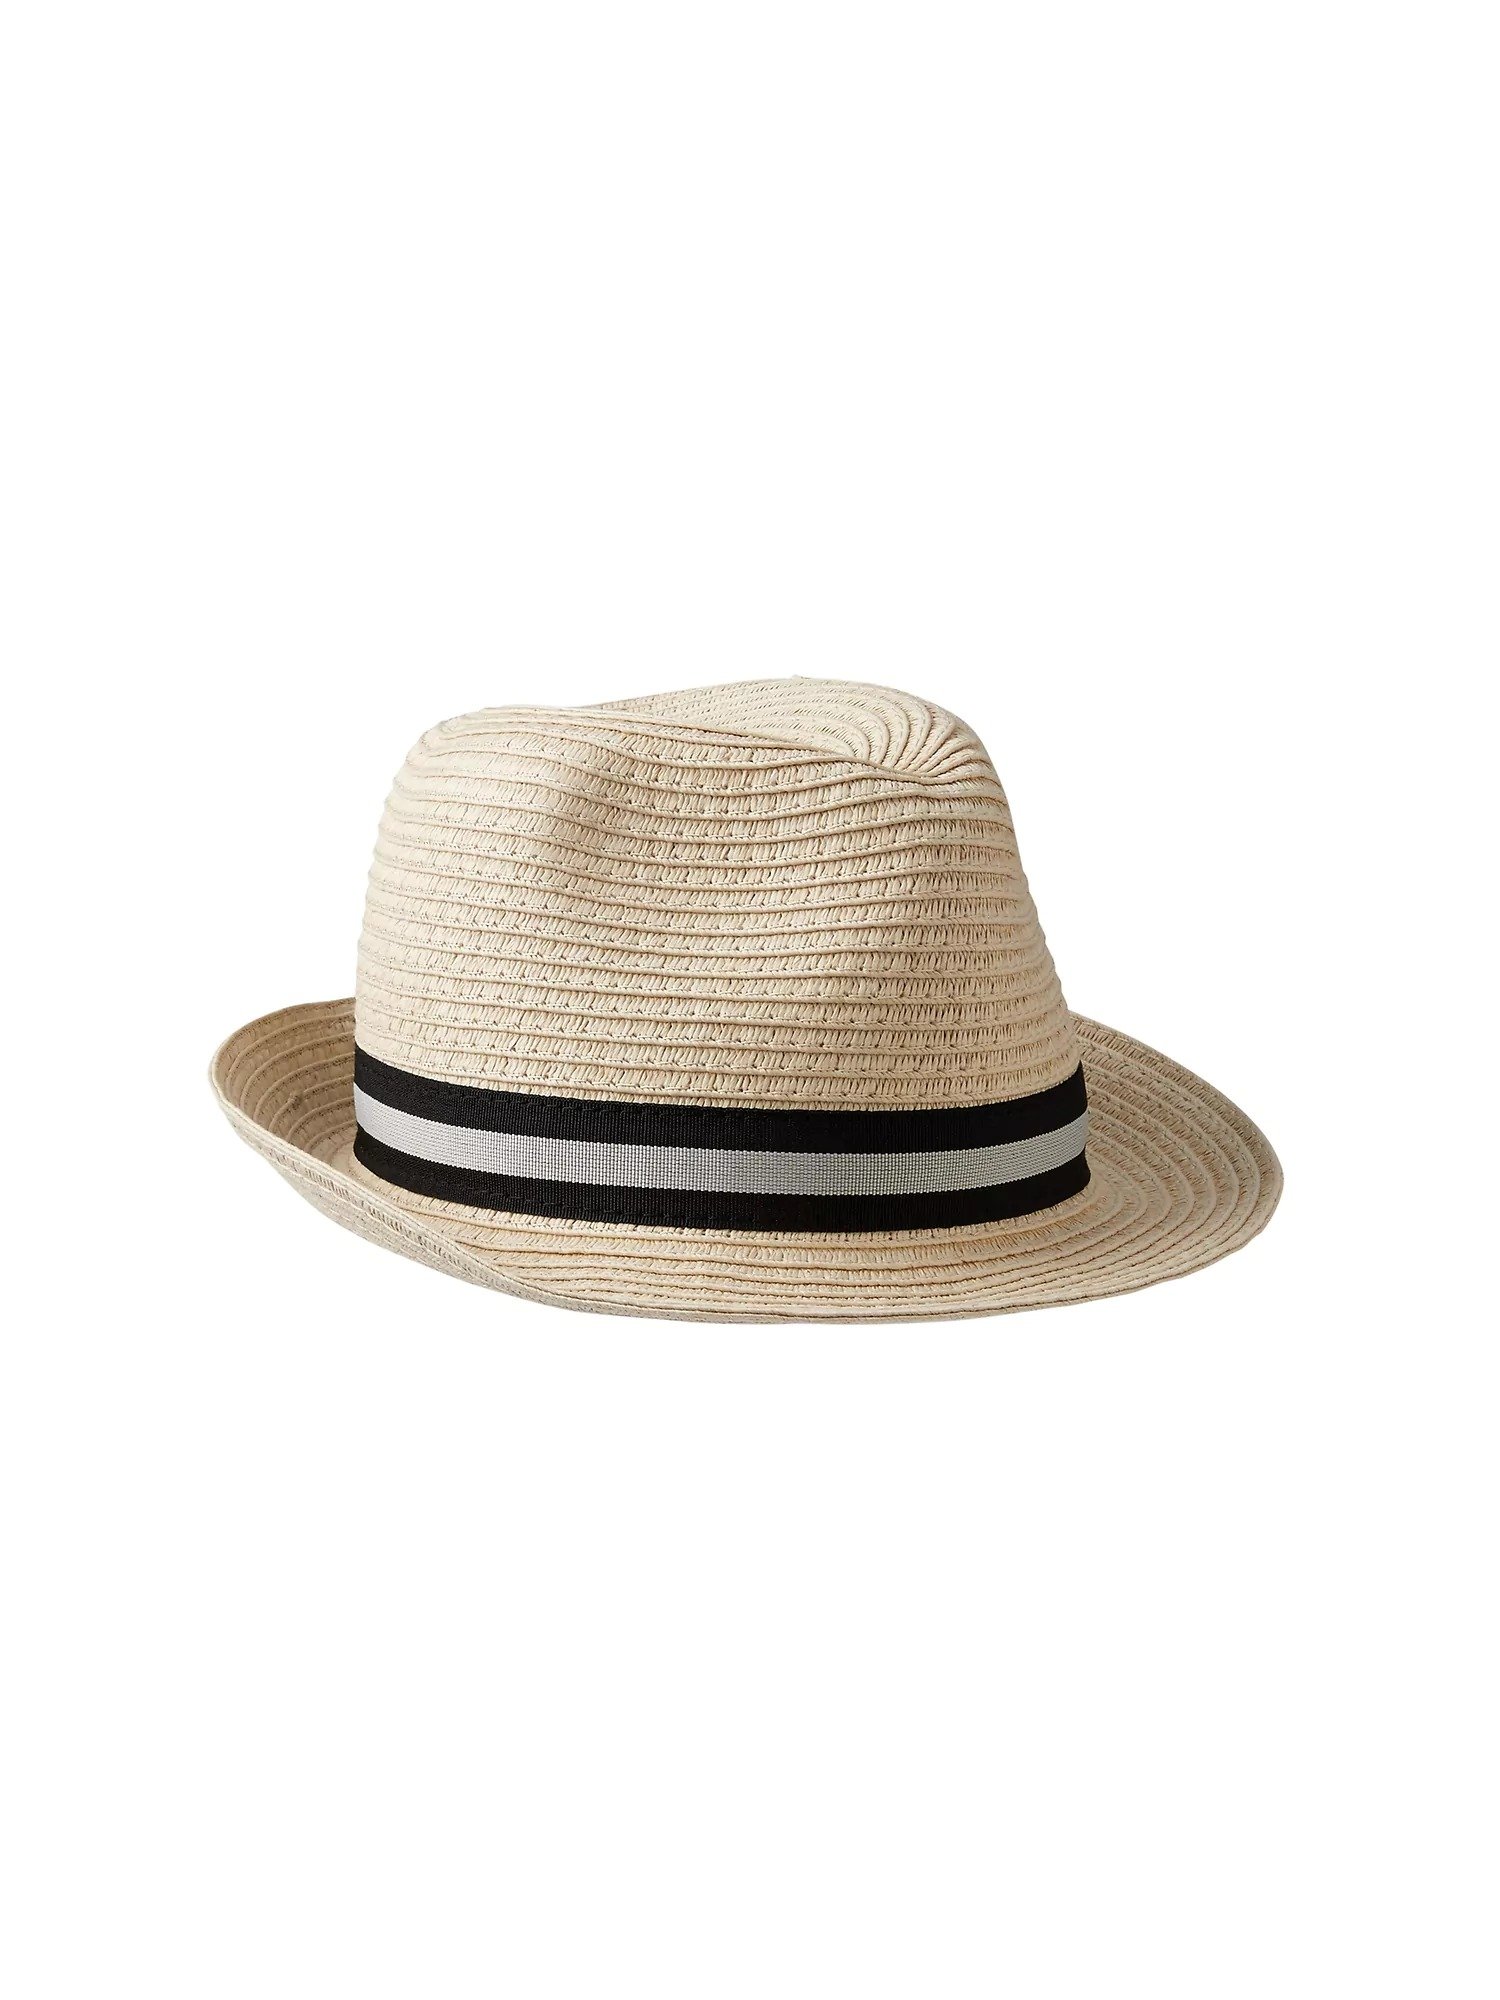 Hasır şapka product image